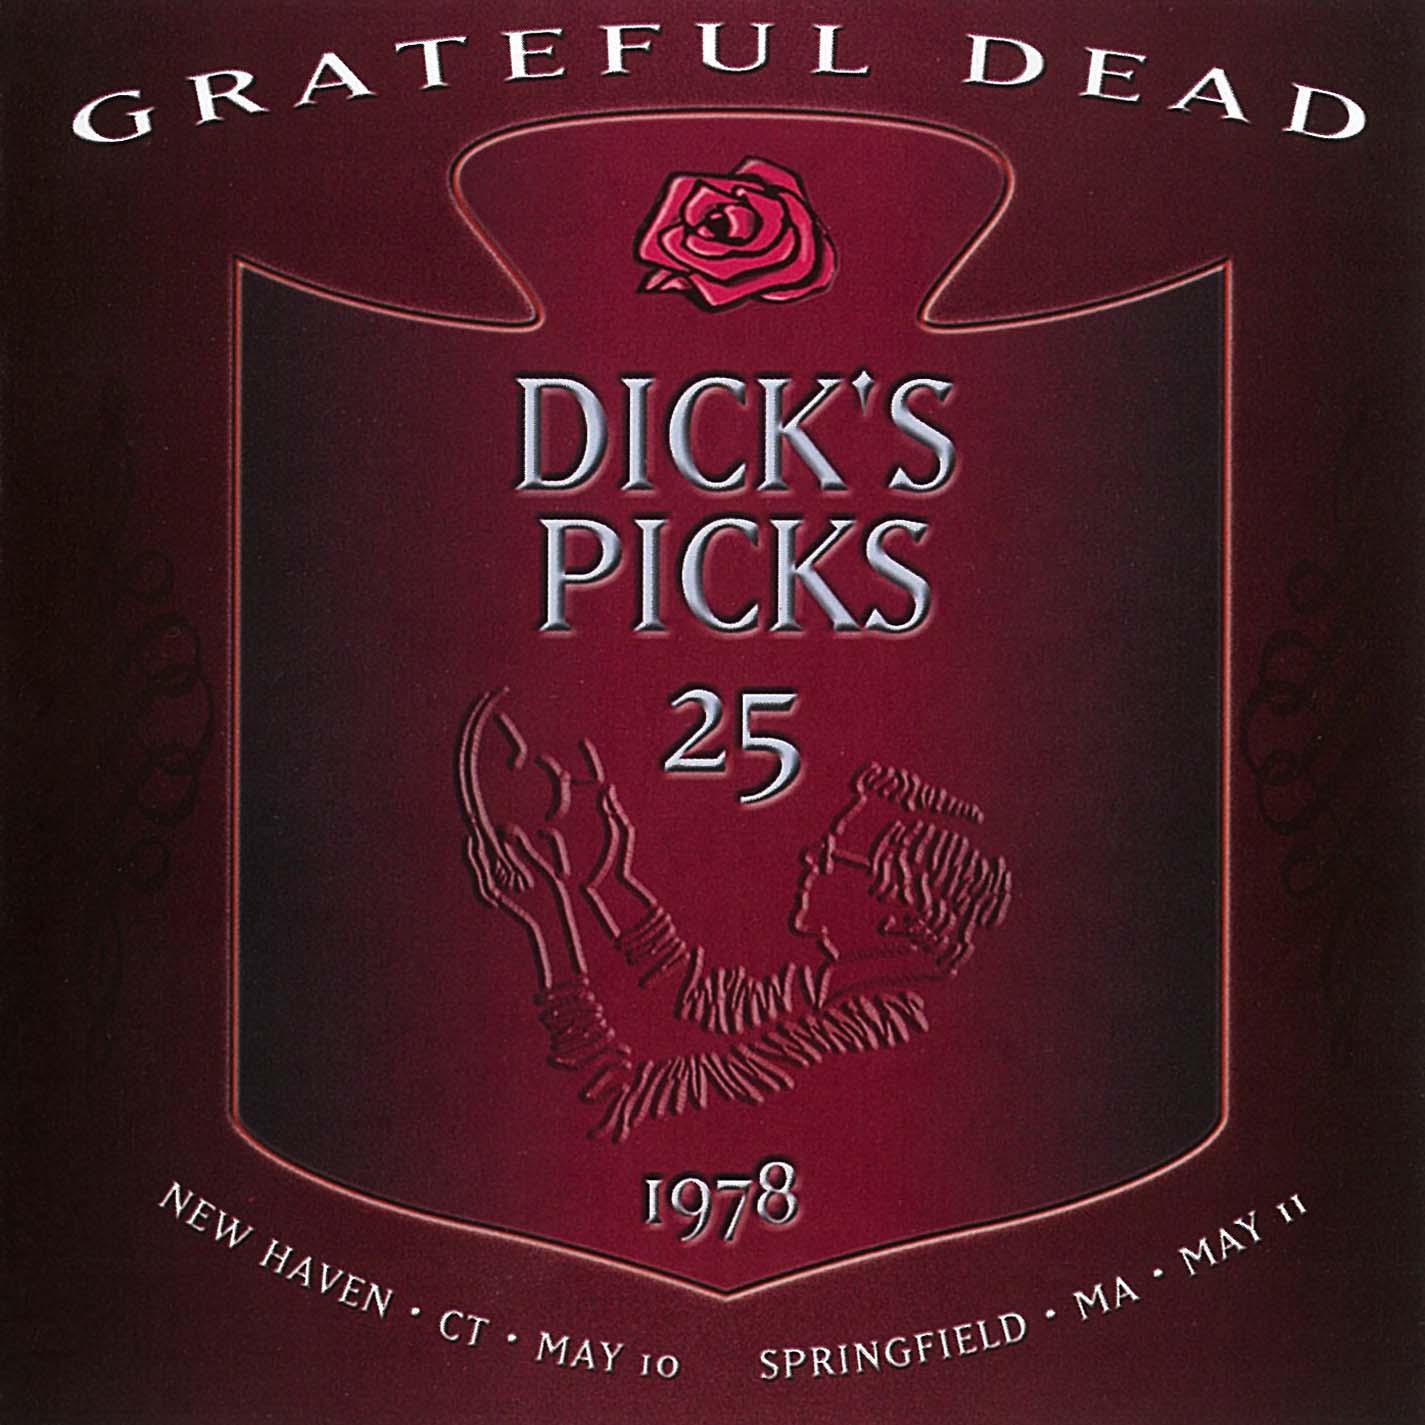 Grateful Dead Dick's Picks 25 album cover artwork